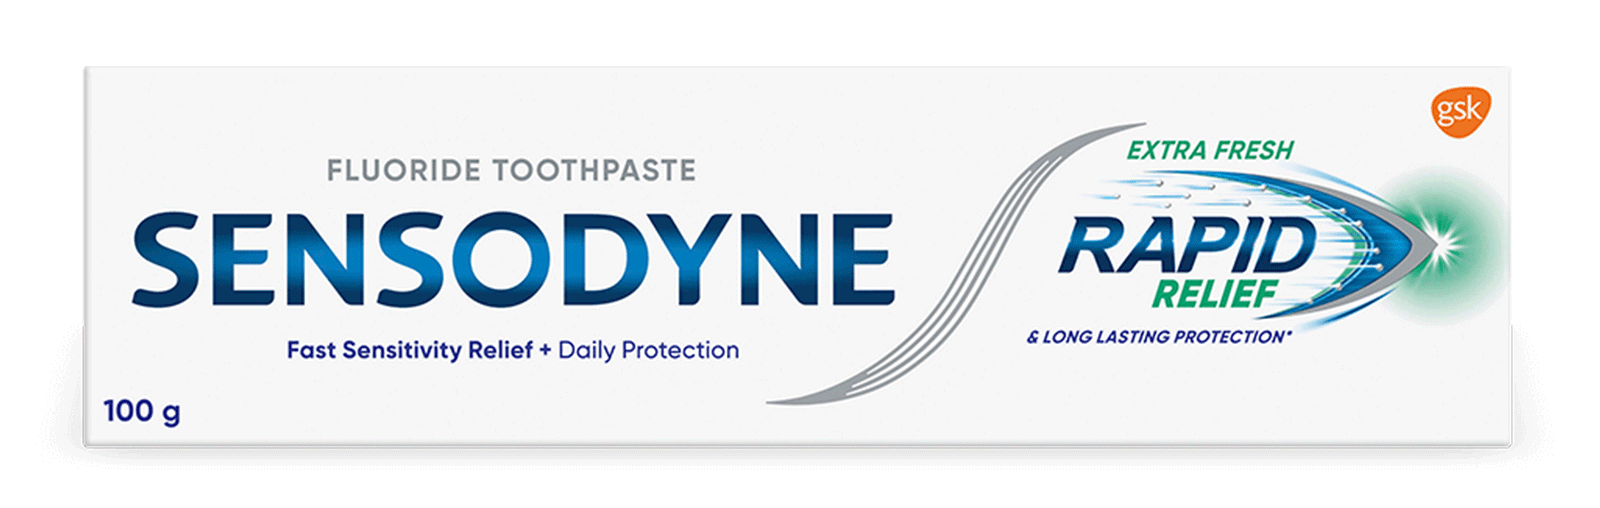 Sensodyne Rapid Relief toothpaste in Extra Fresh